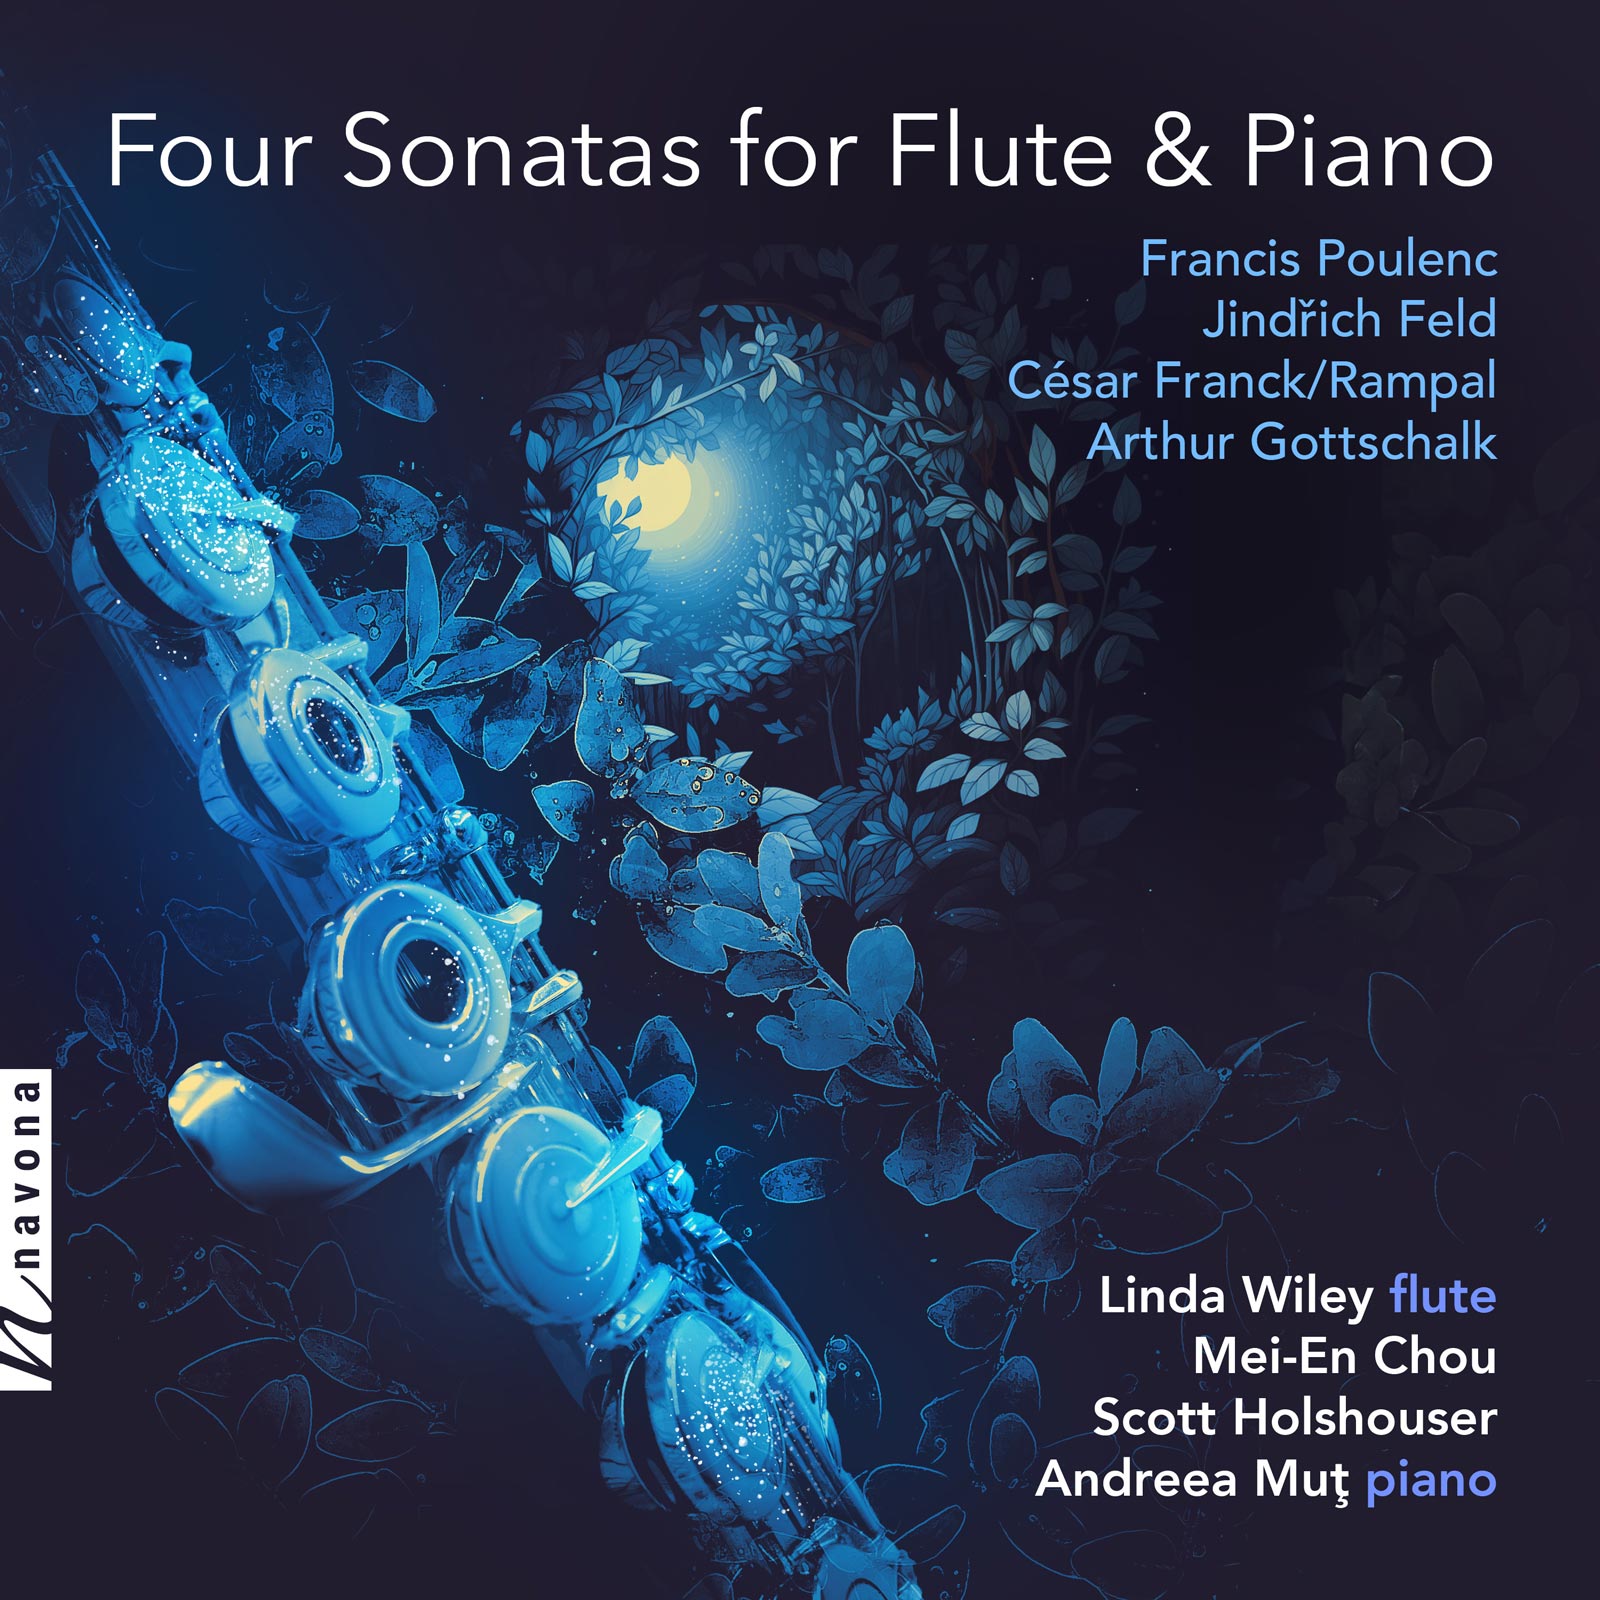 FOUR SONATAS FOR FLUTE AND PIANO